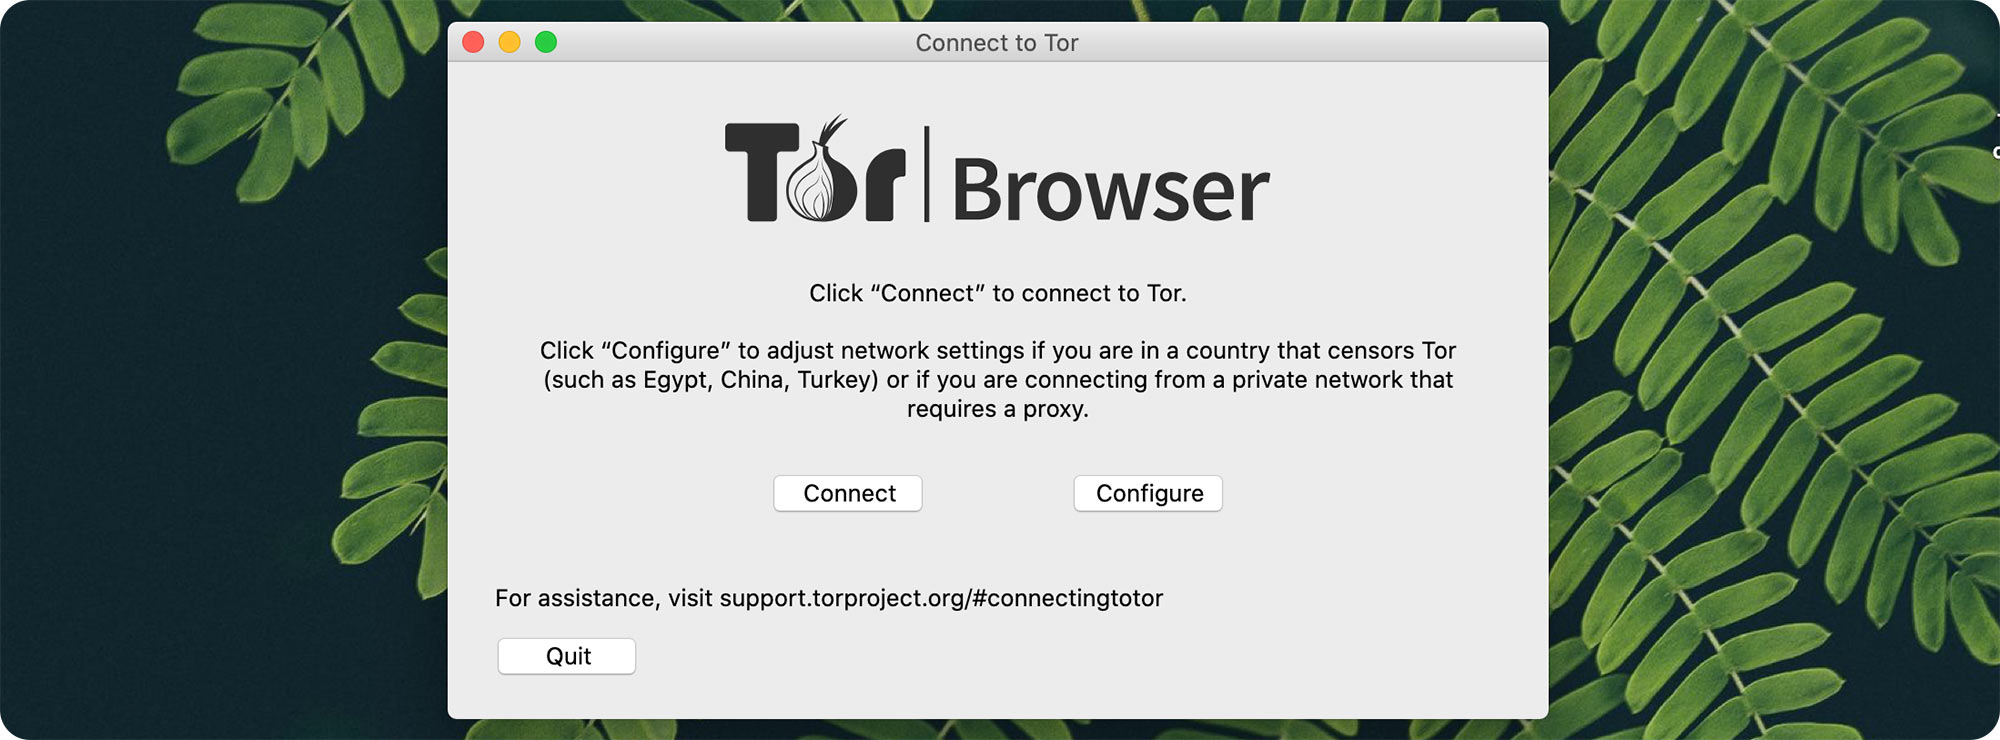 Tor browser for mac 6 вход на гидру в чем прикол браузера тор вход на гидру